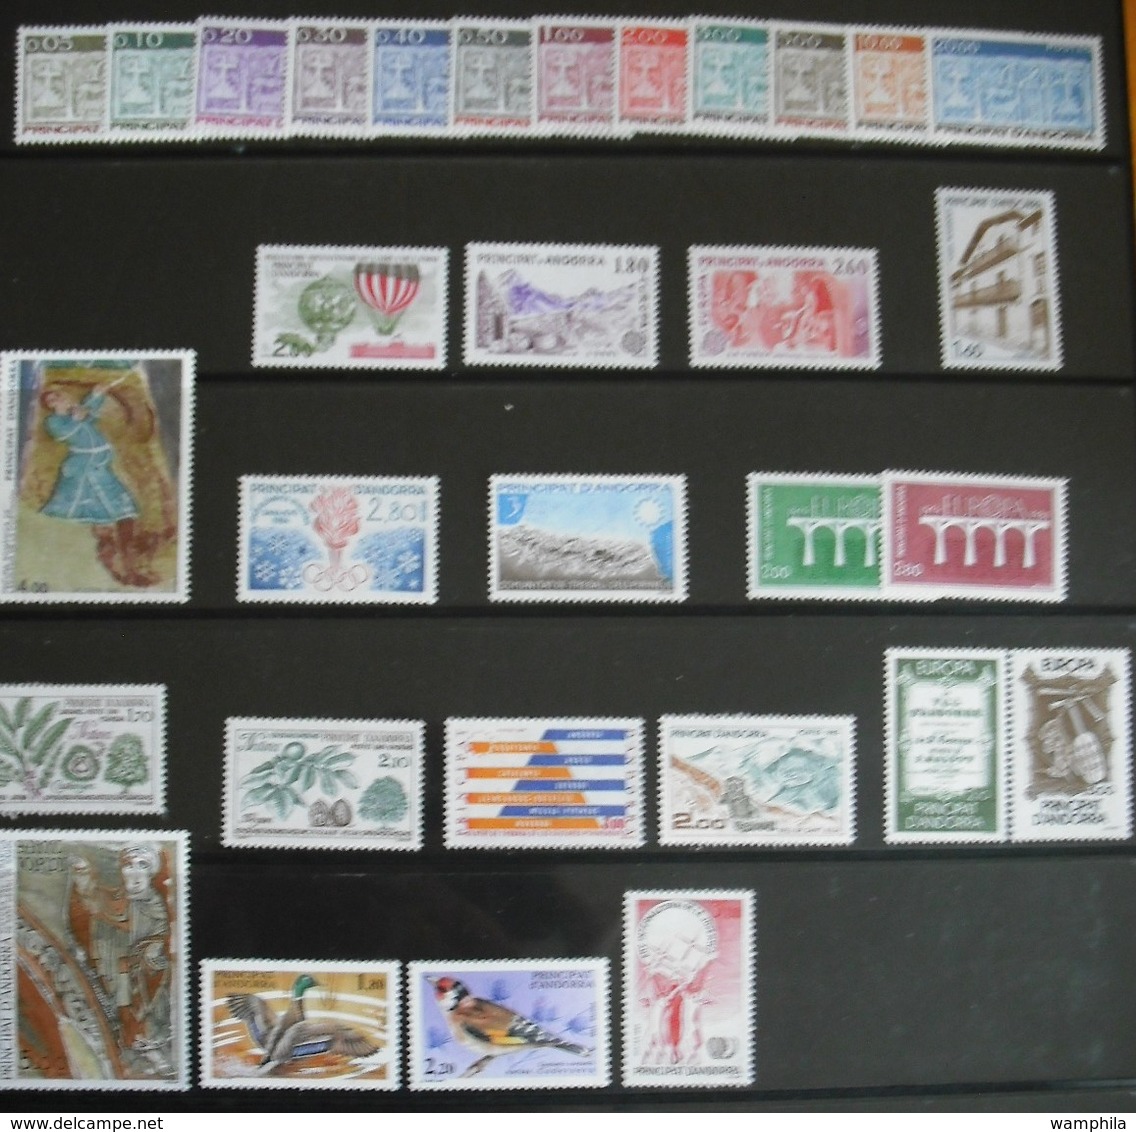 Andorre Francais une collection de timbres neufs, catalogue 2011.cote 1170€